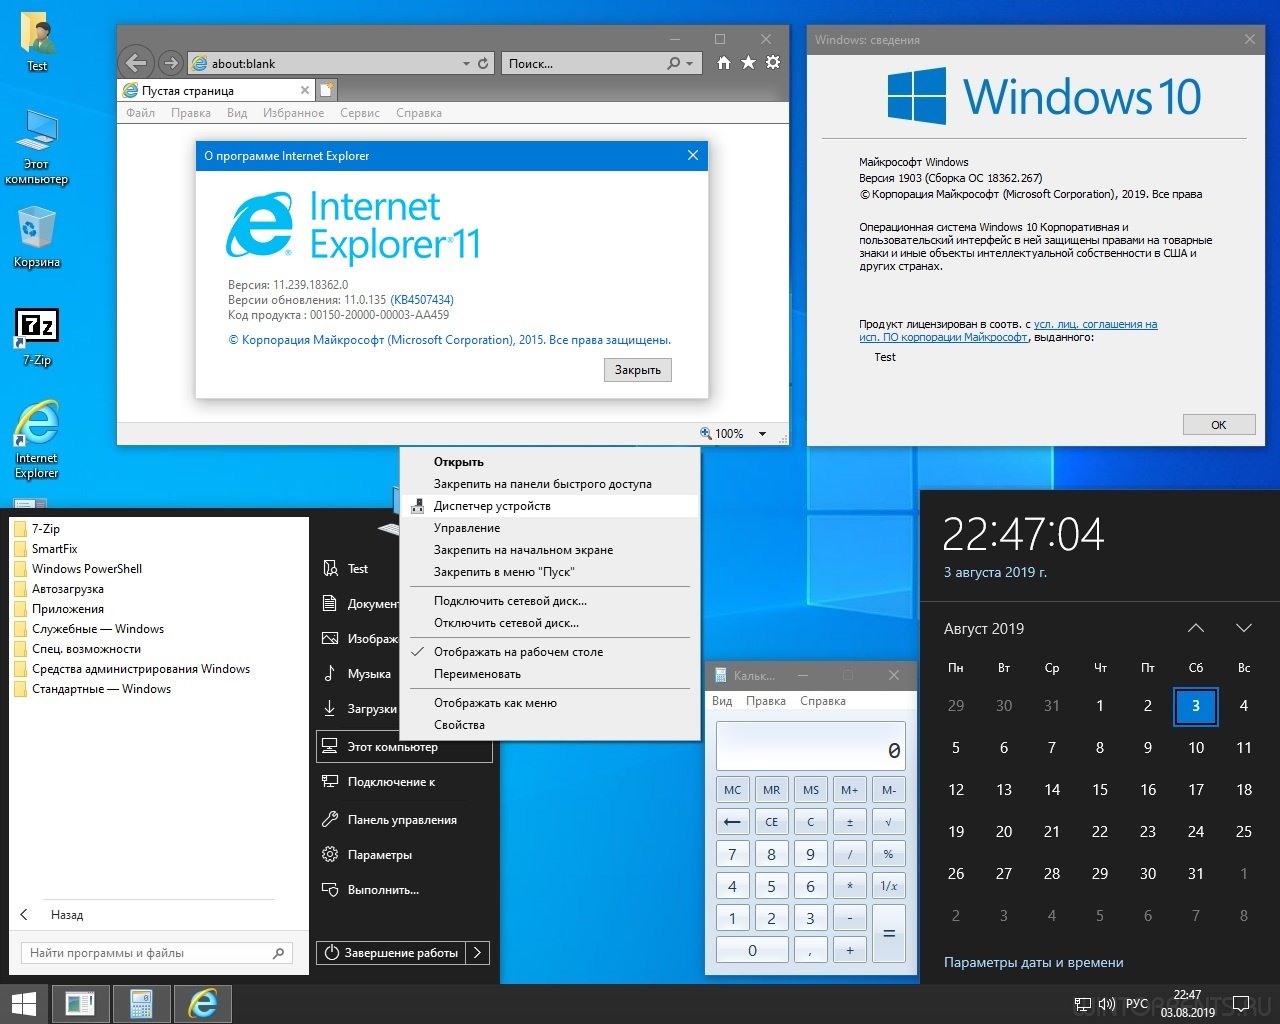 Windows 10 Корпоративная (x64) 1903.18362.267 by ivandubskoj v.30.08.2019